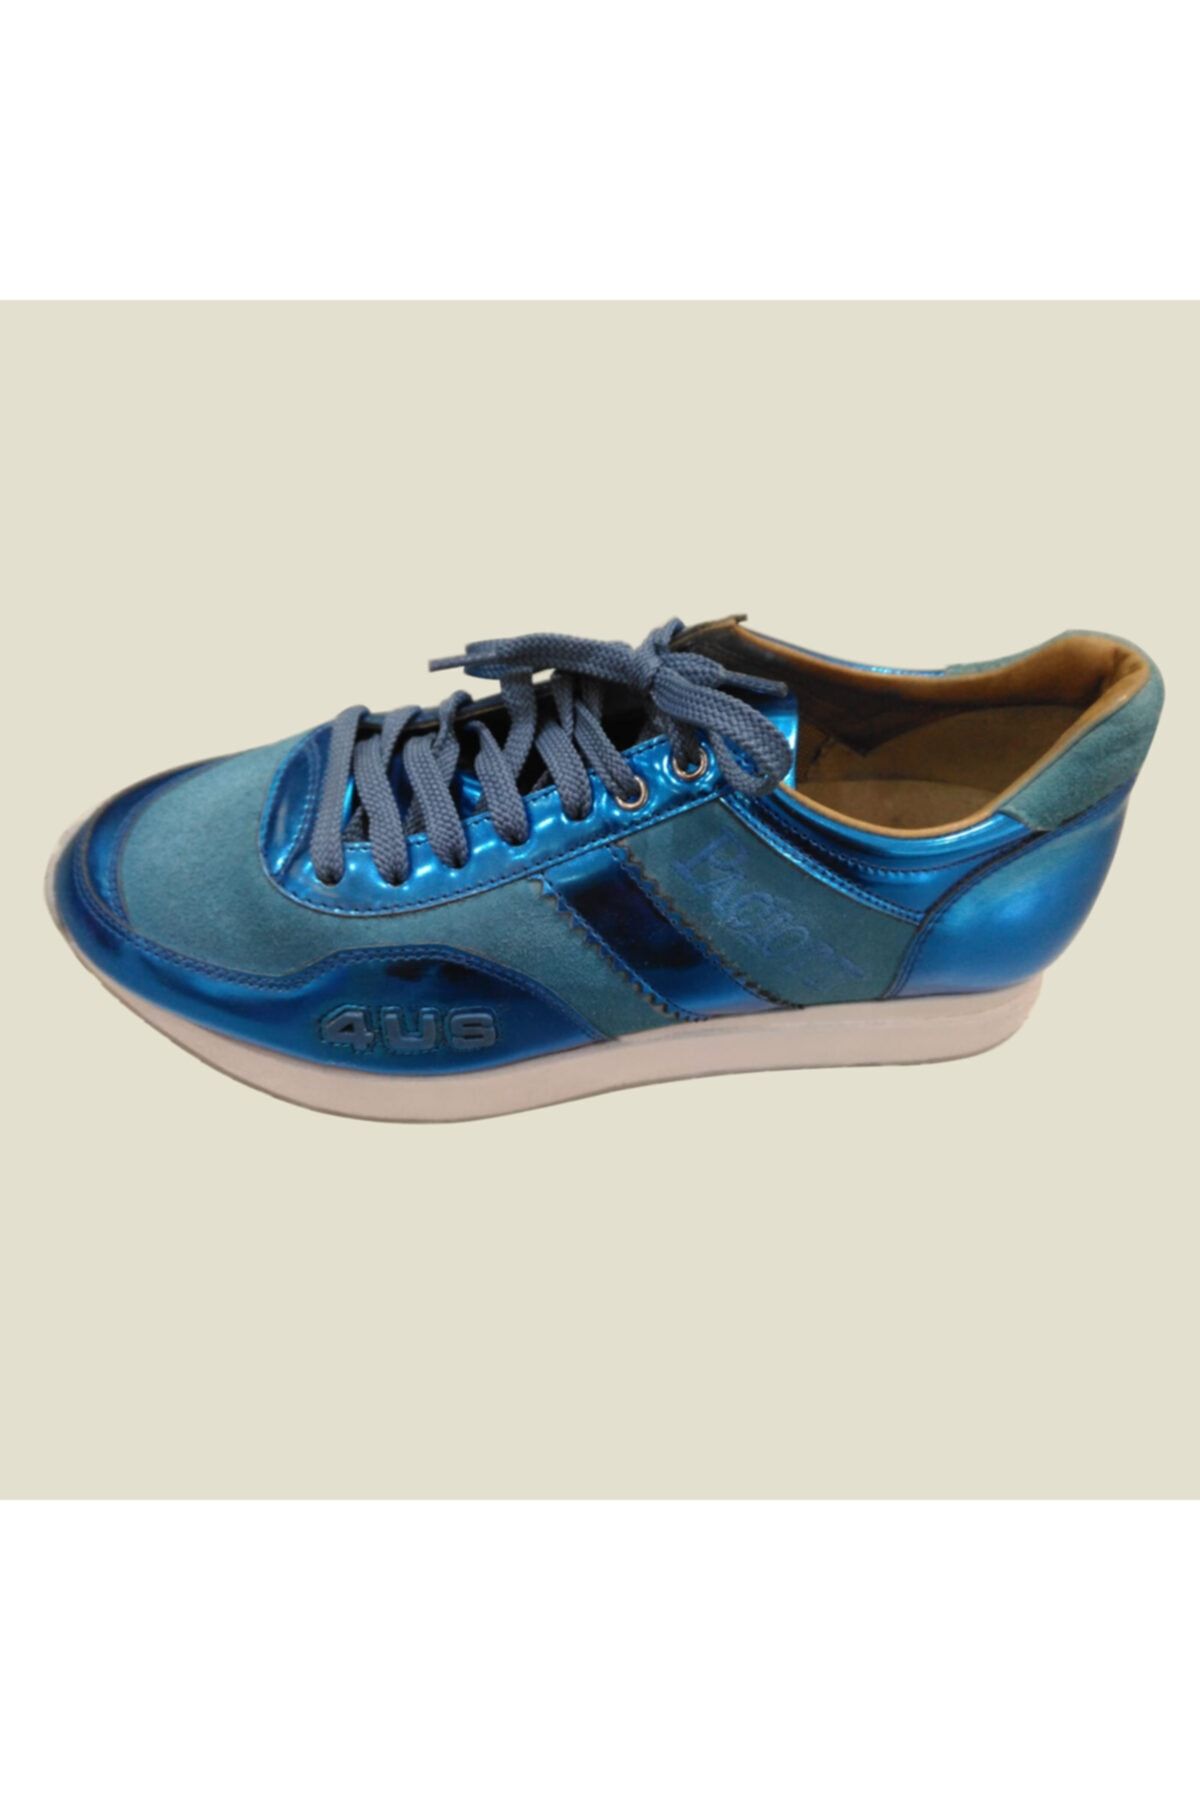 Cesare Paciotti Spor Ayakkabı Mavi 2399